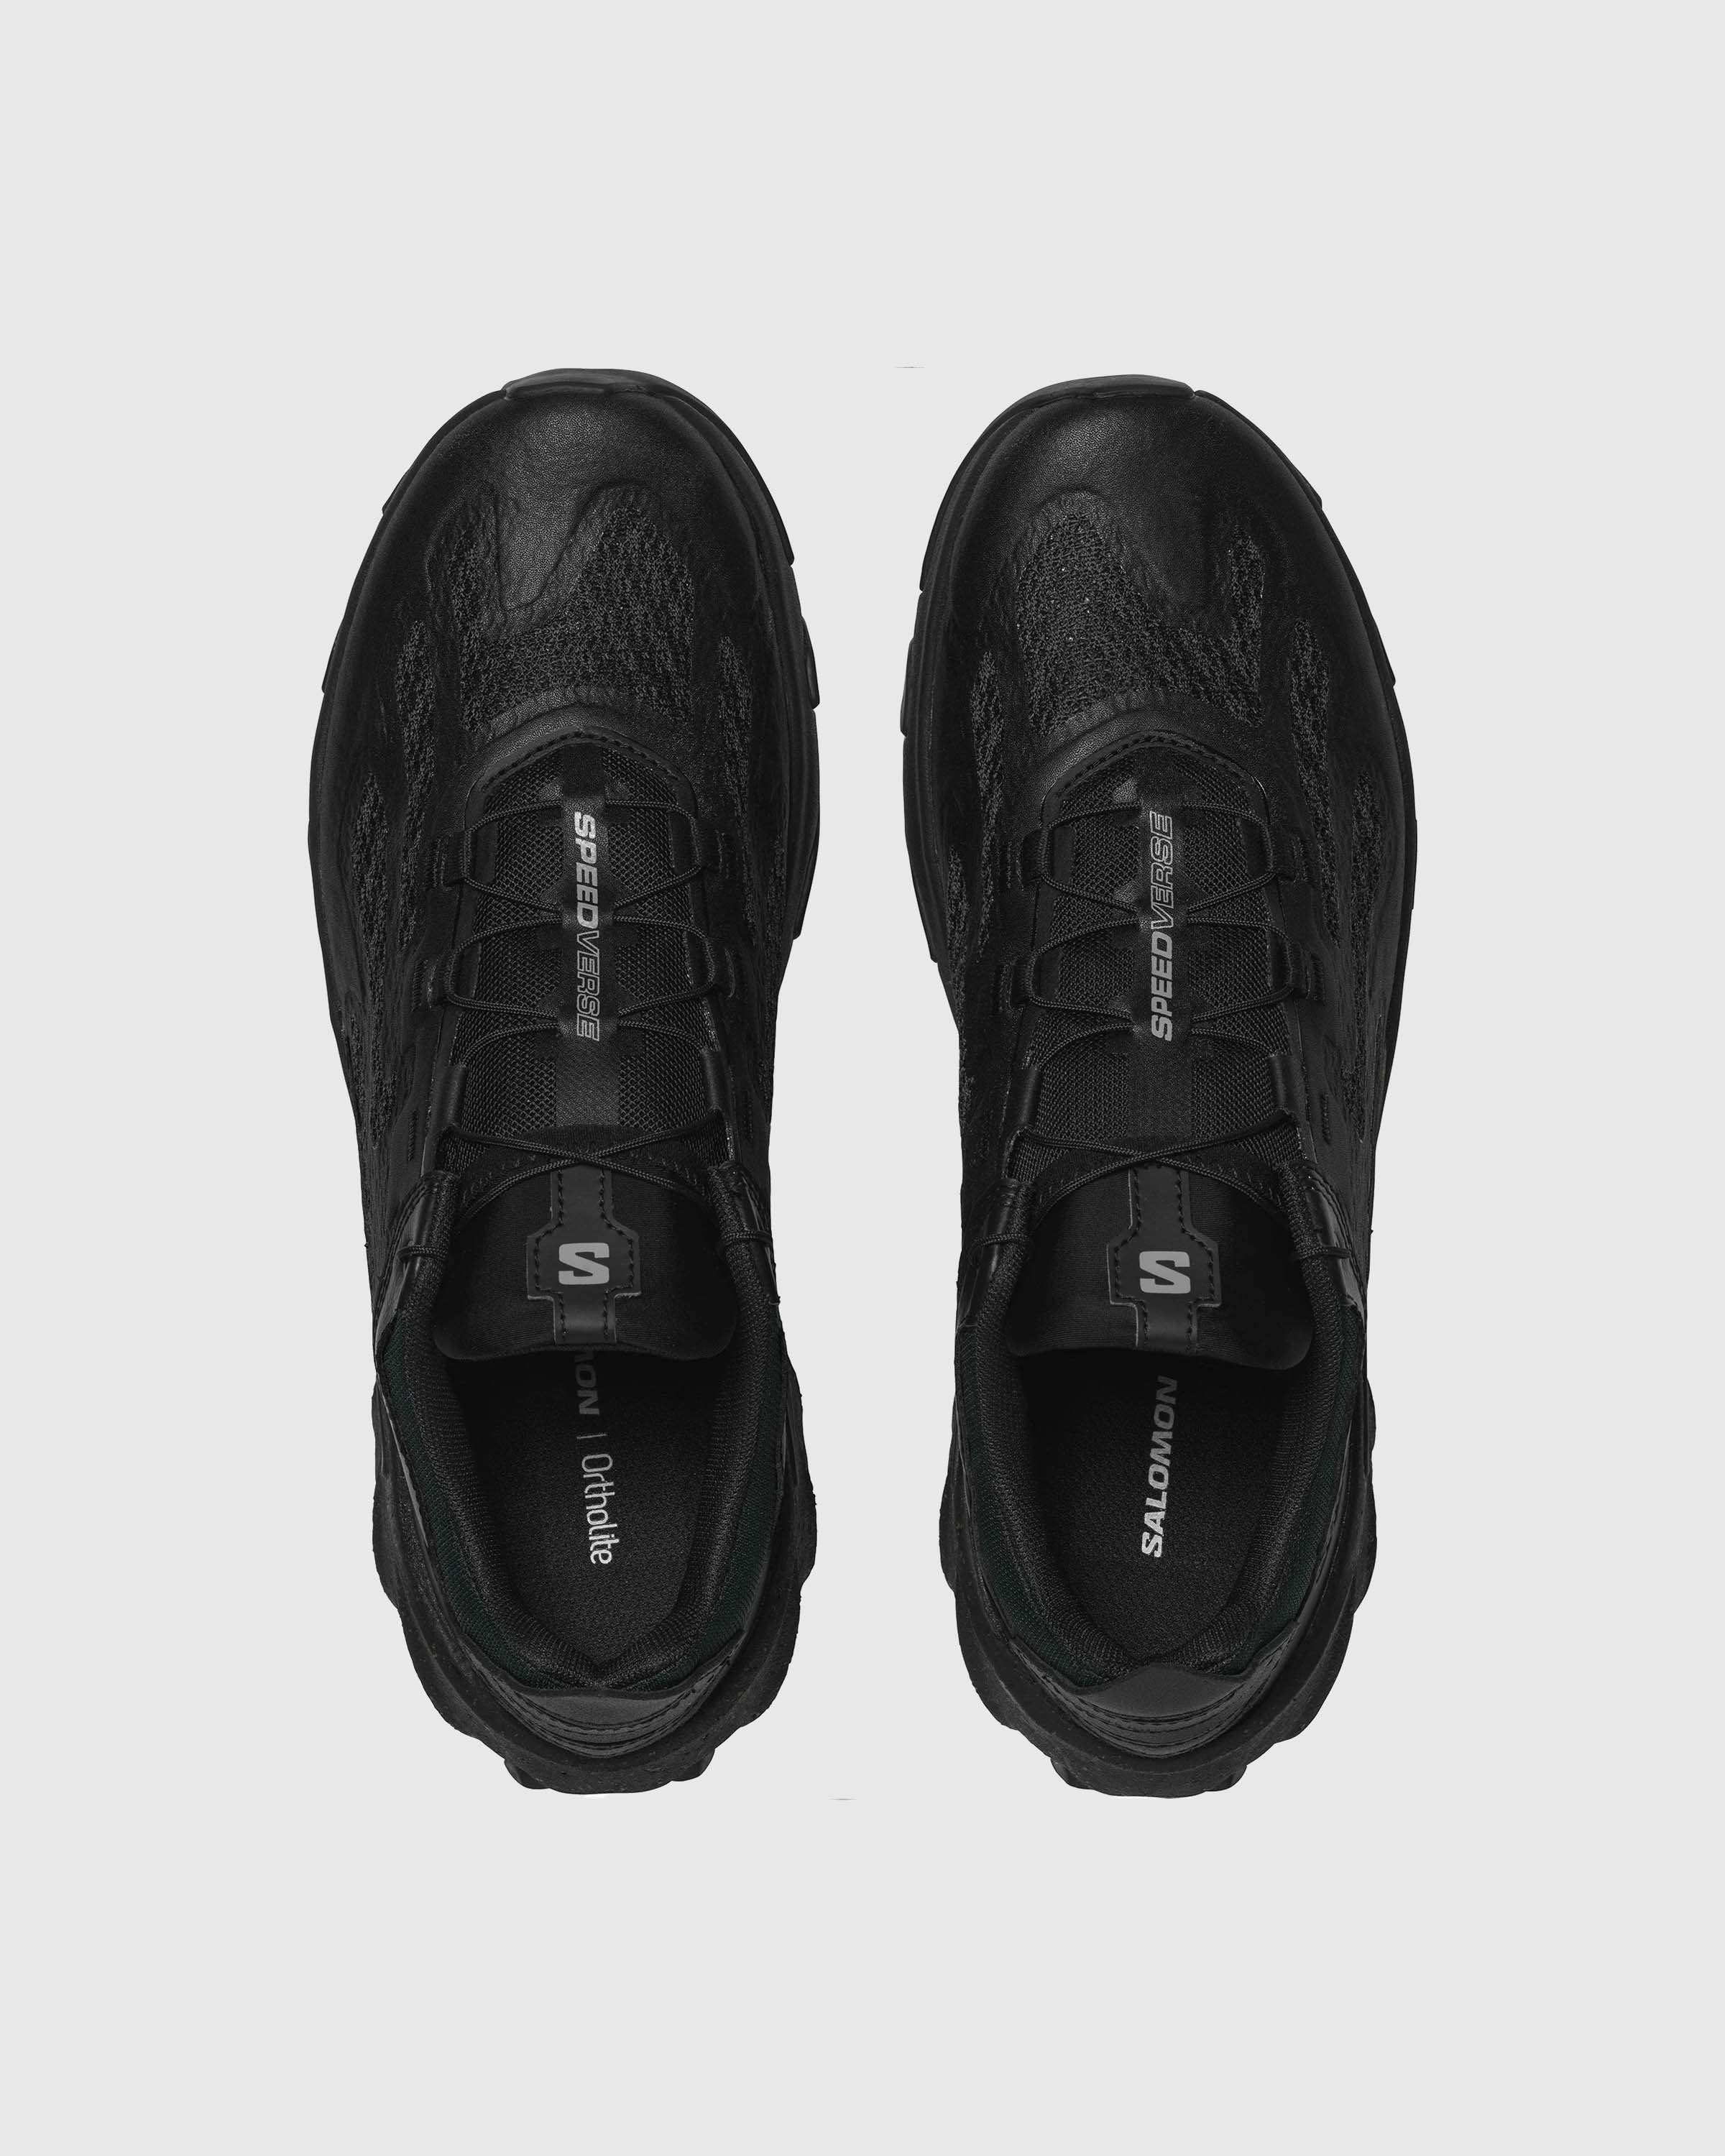 Salomon - Speedverse PRG Black/Alloy/Black - Footwear - Black - Image 4